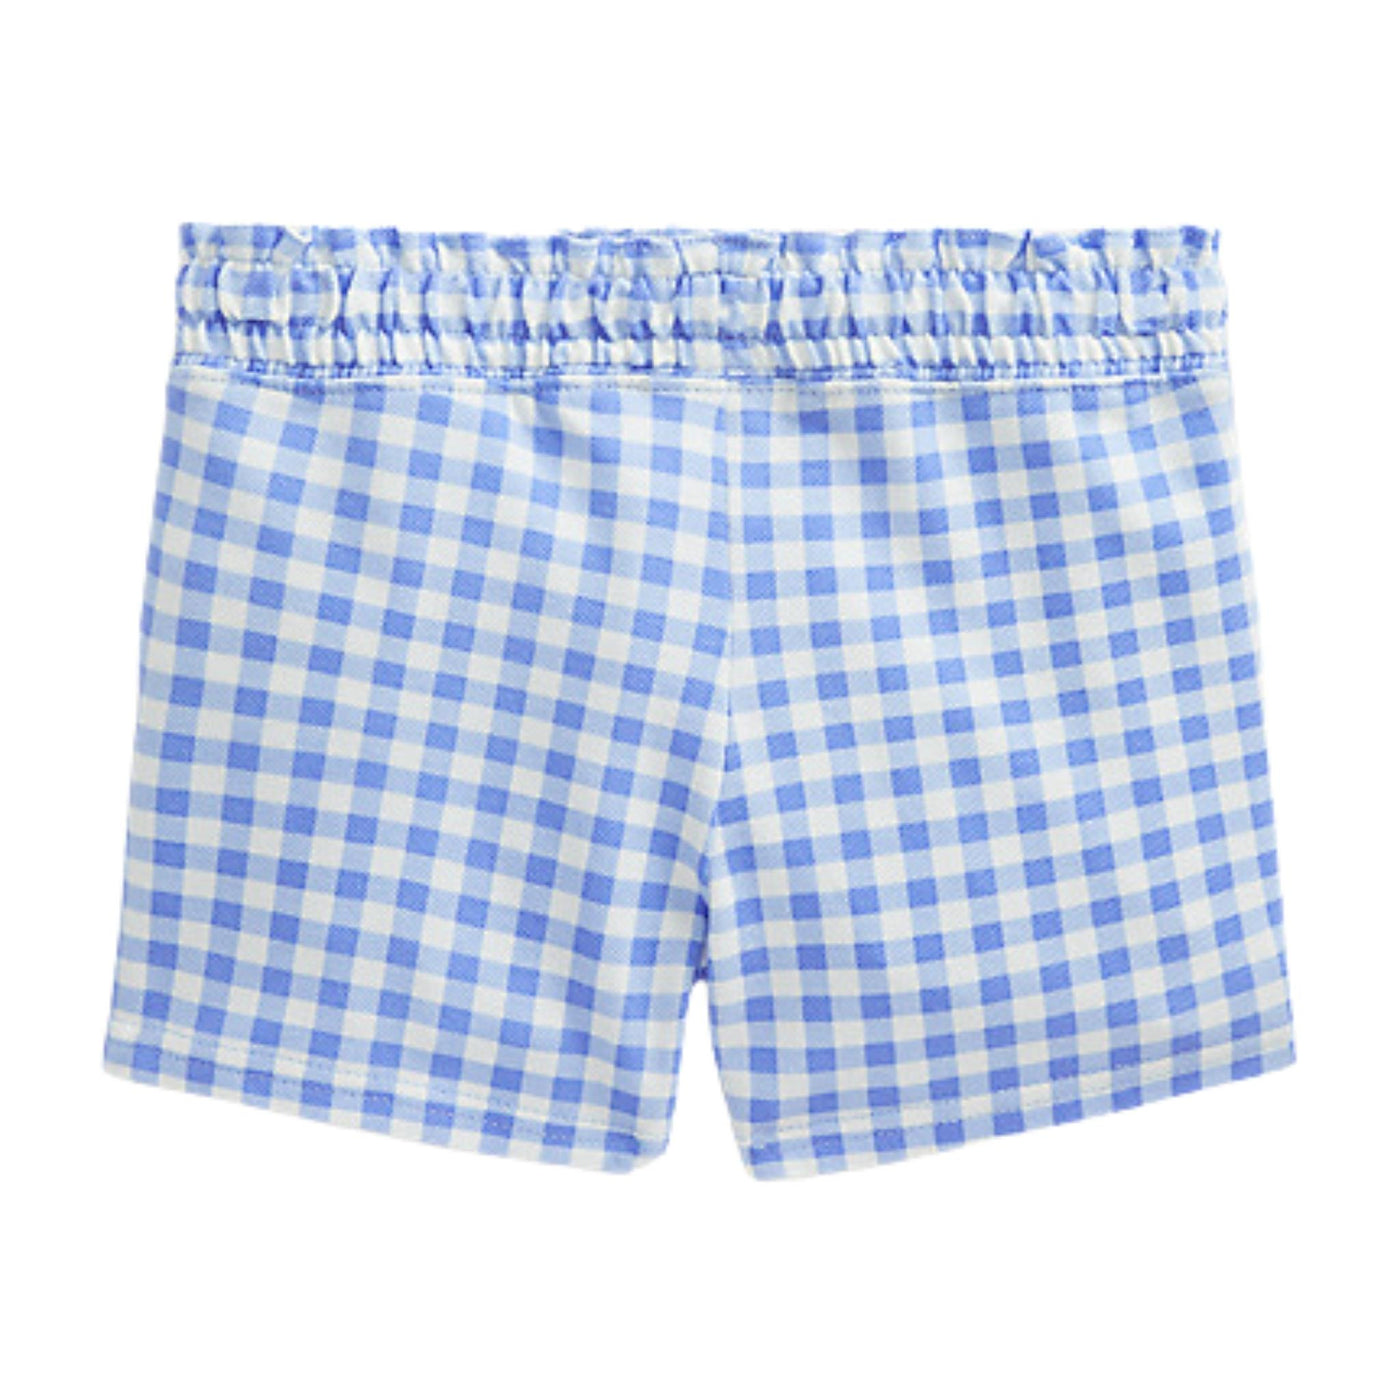 shorts da bambina ralph lauren a quadrettu vichy azzurro retro